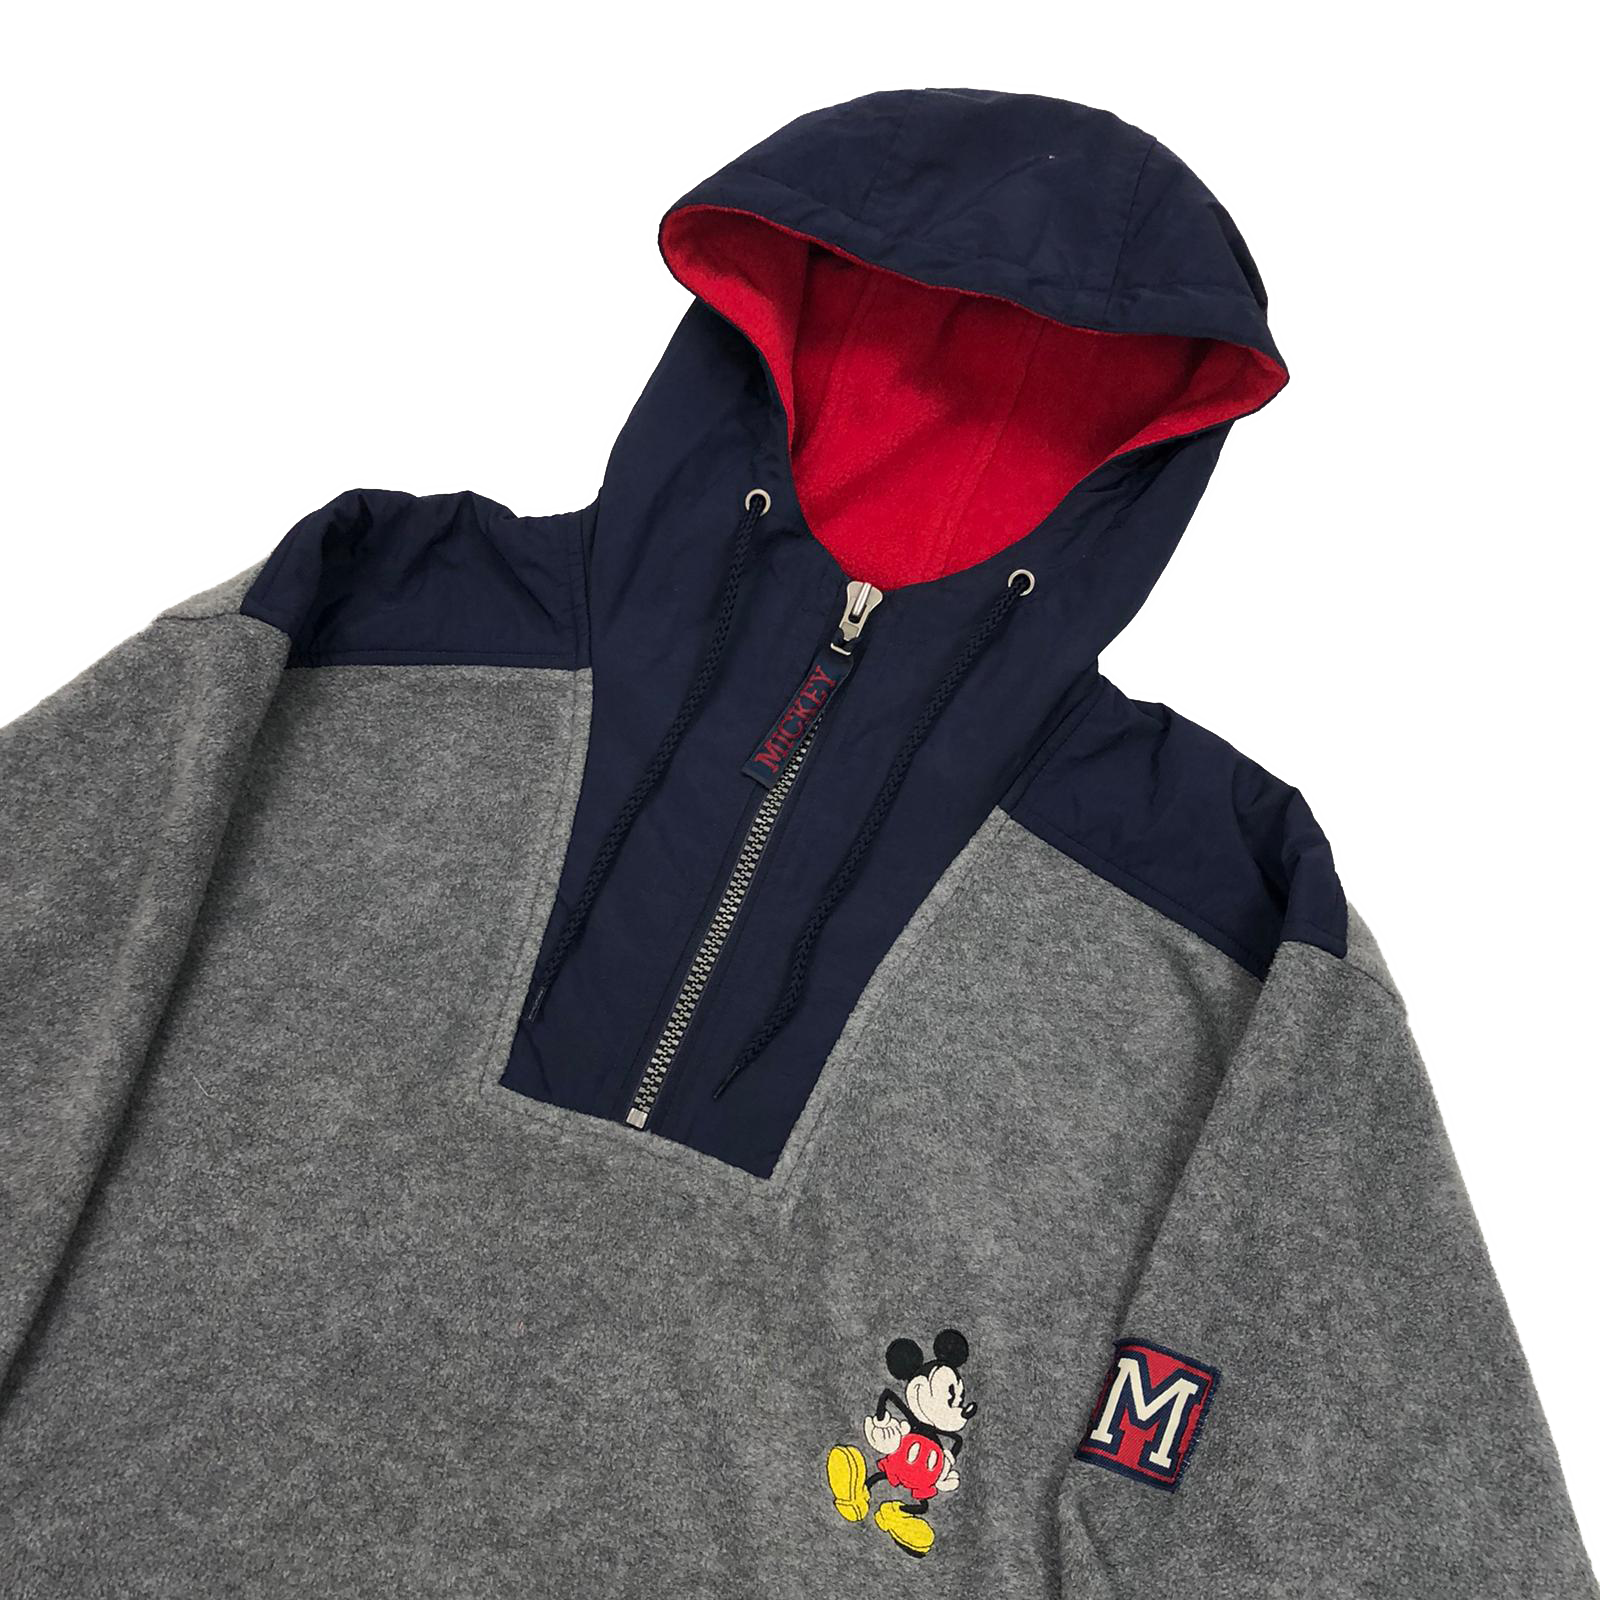 90's Disney fleece jacket